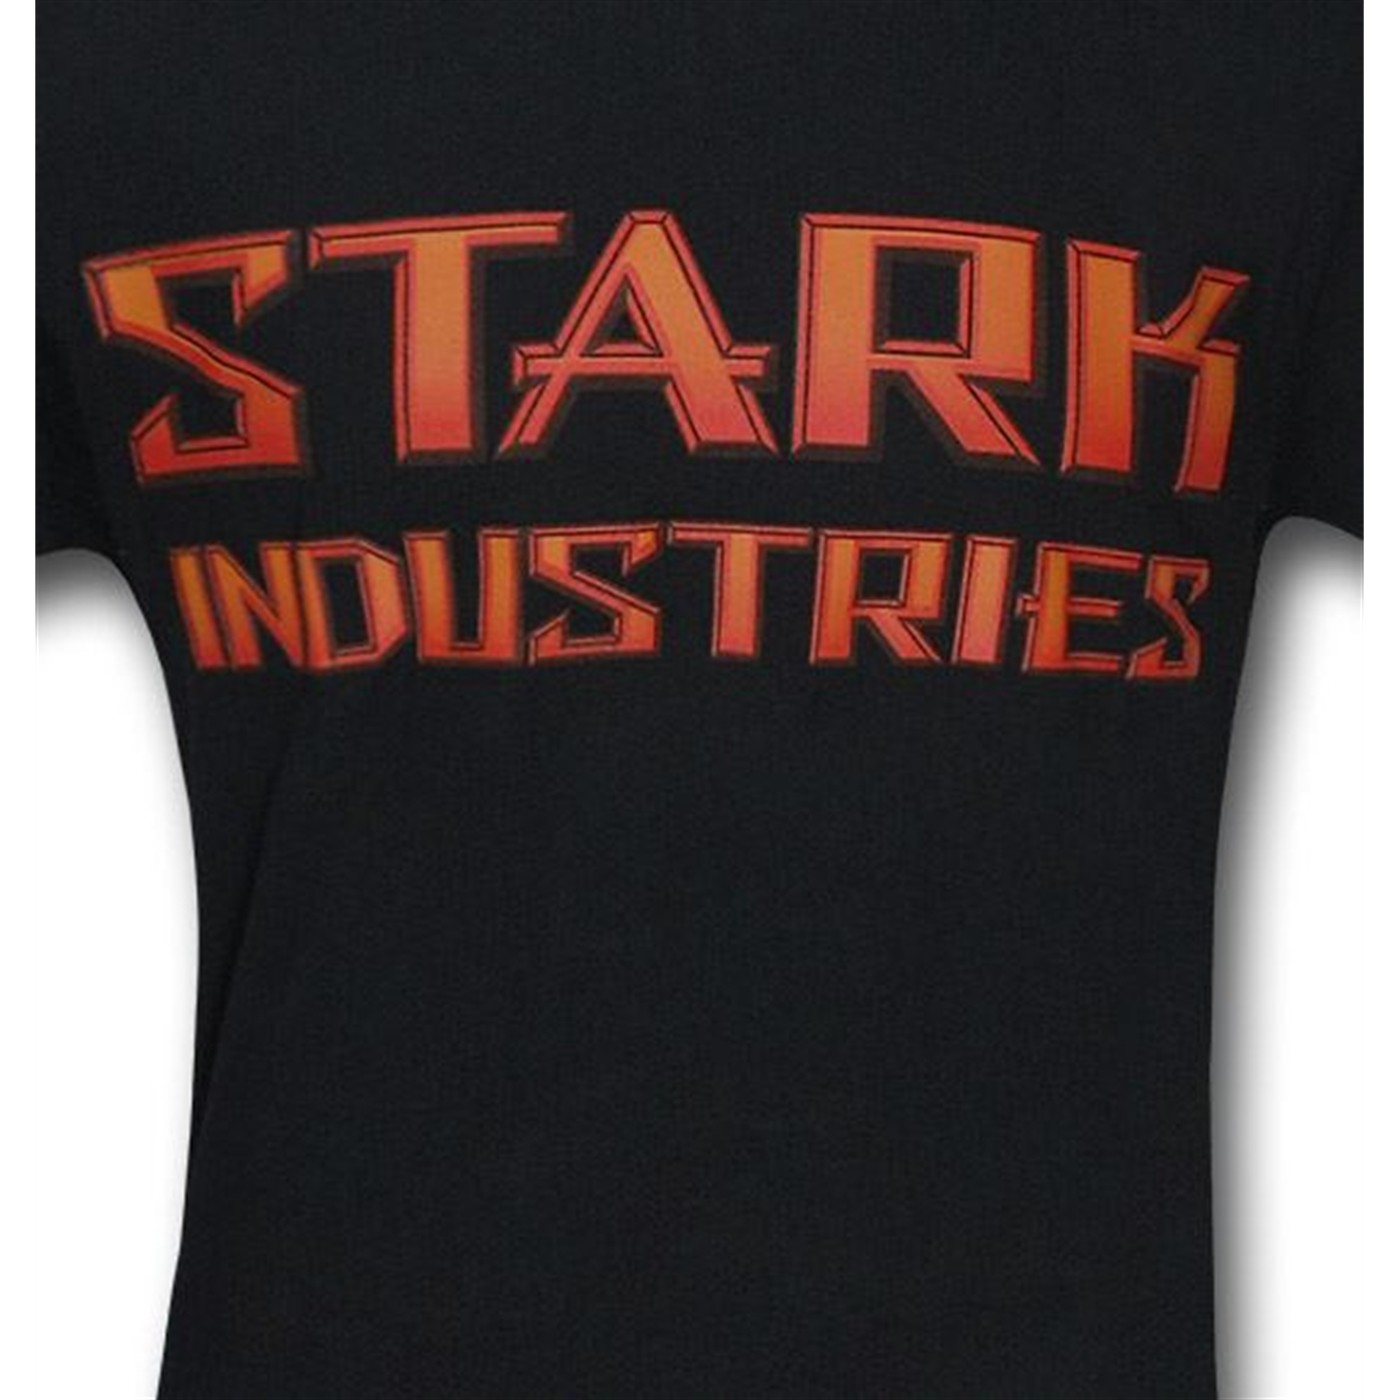 Iron Man Stark Industries Logo T-Shirt